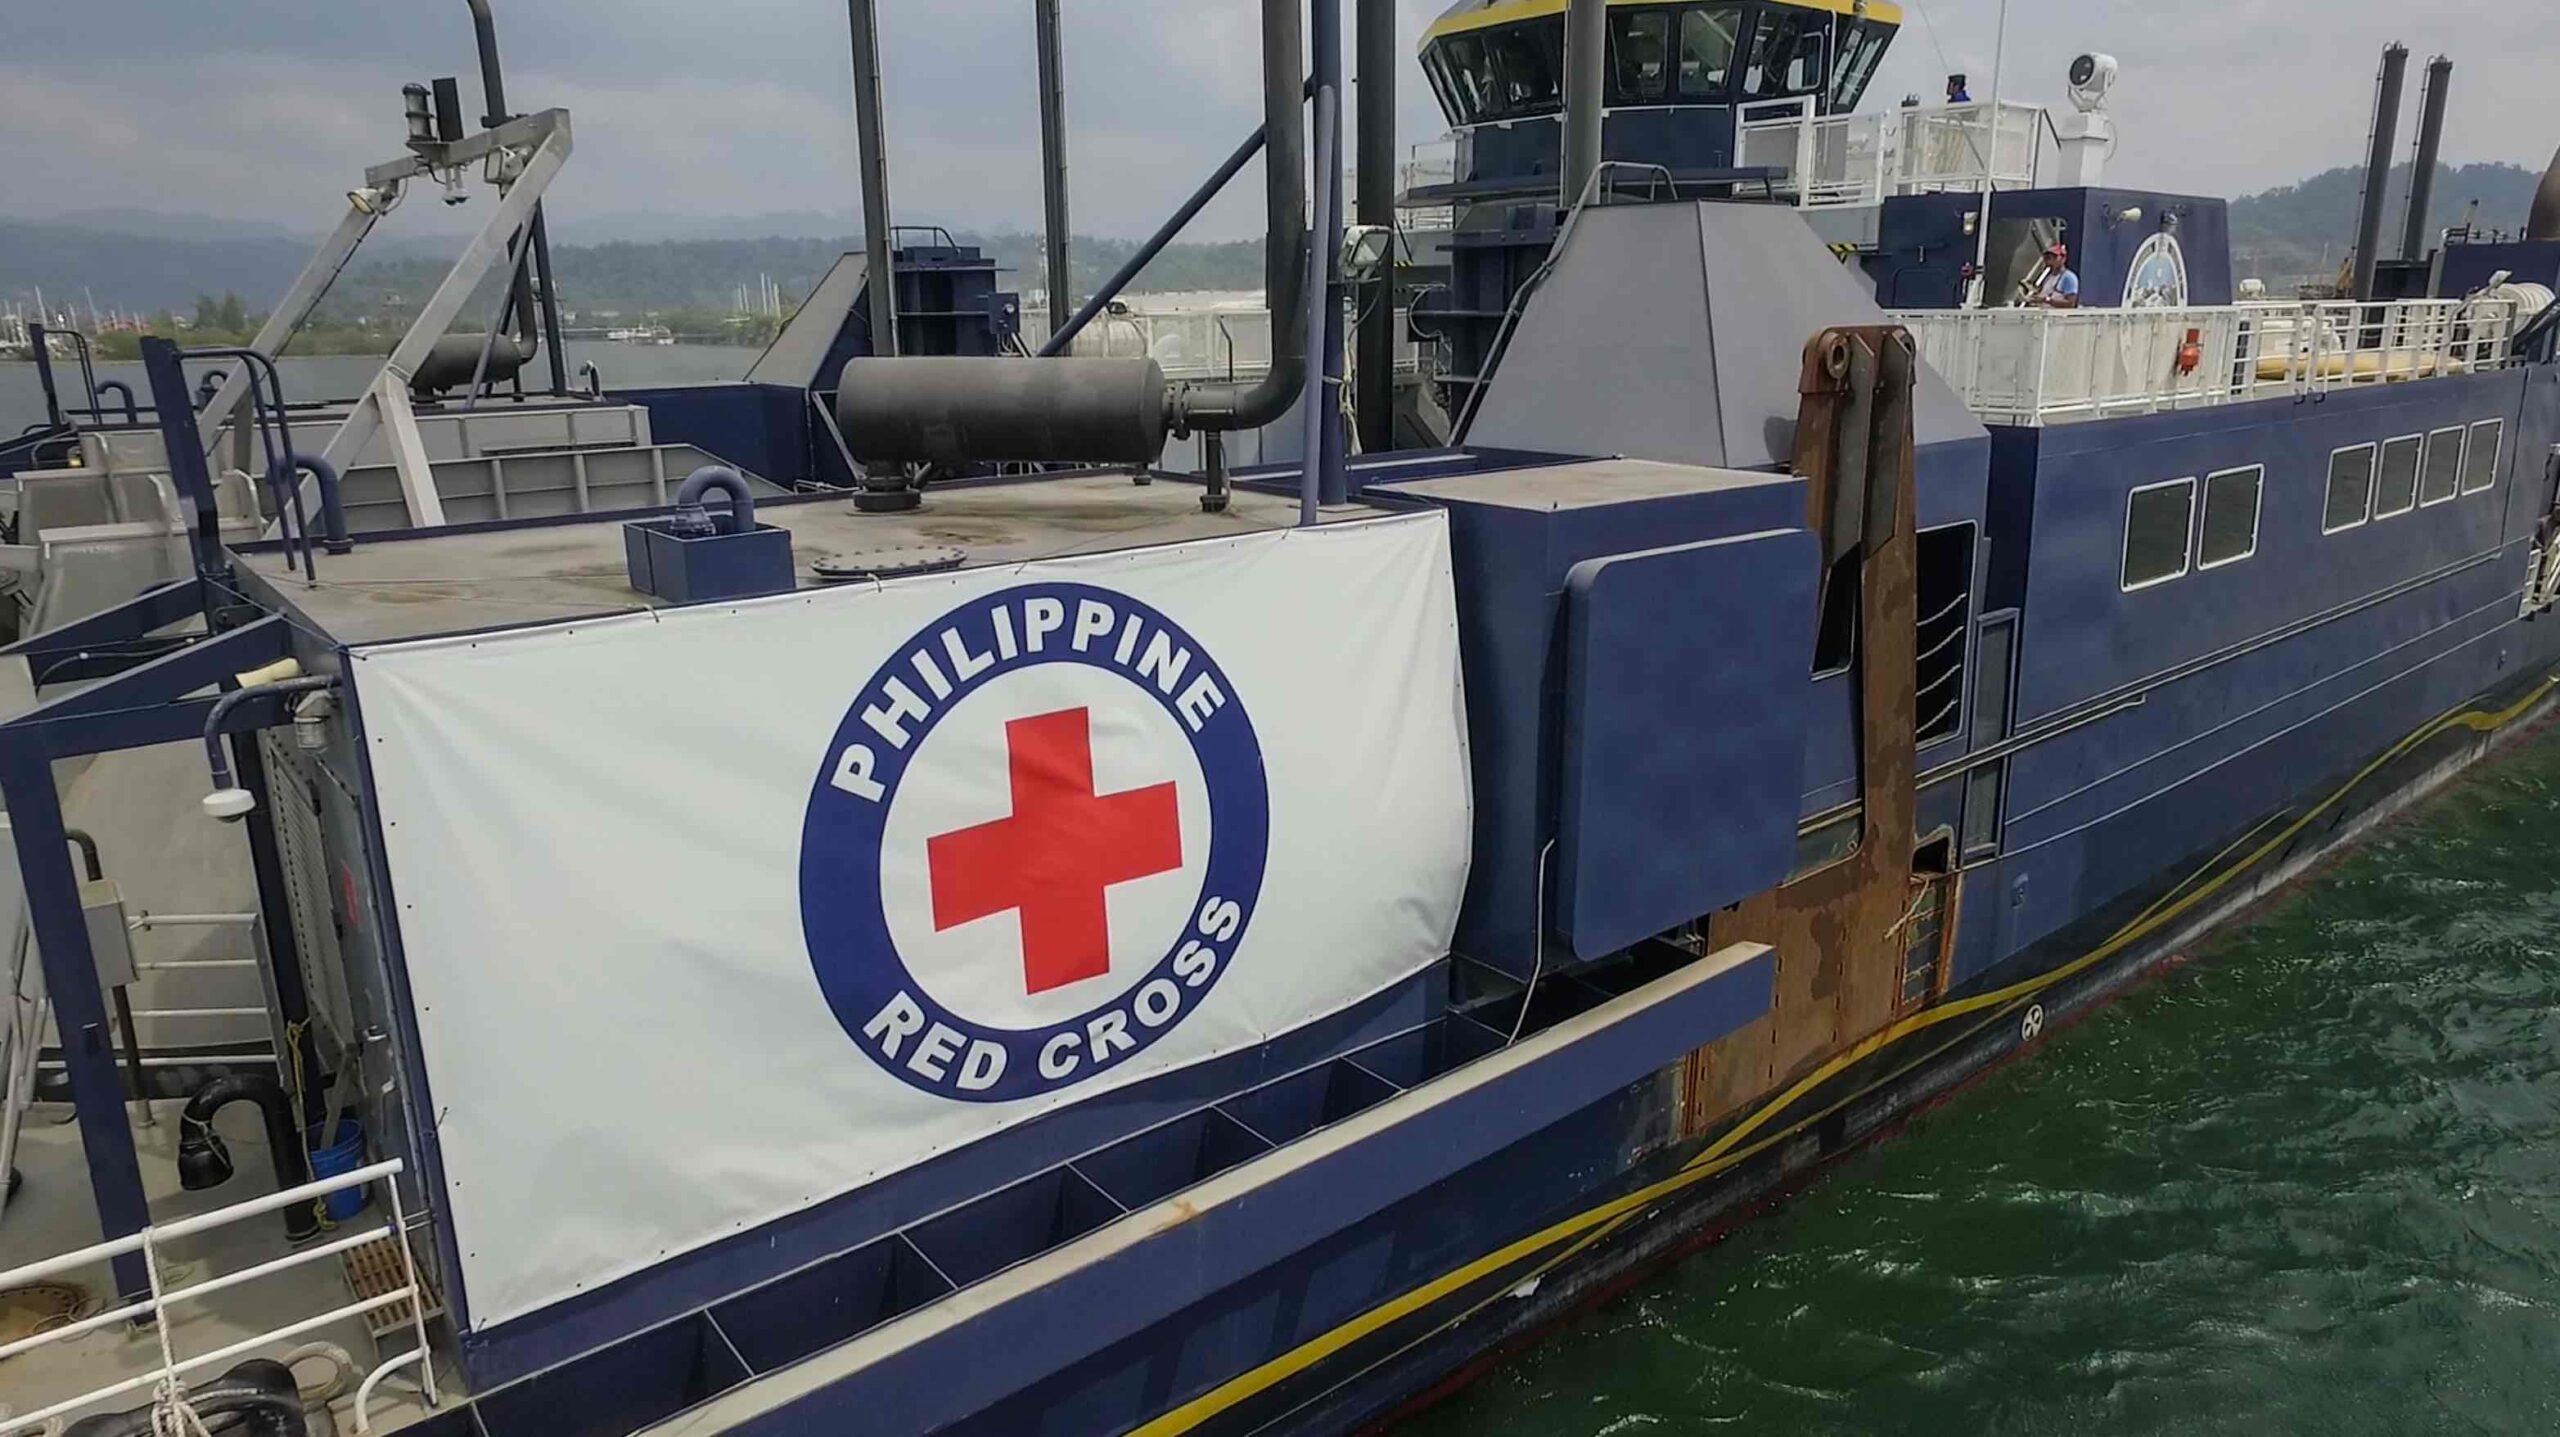 WATCH: #NameThatRedCrossShip, PH’s first humanitarian vessel